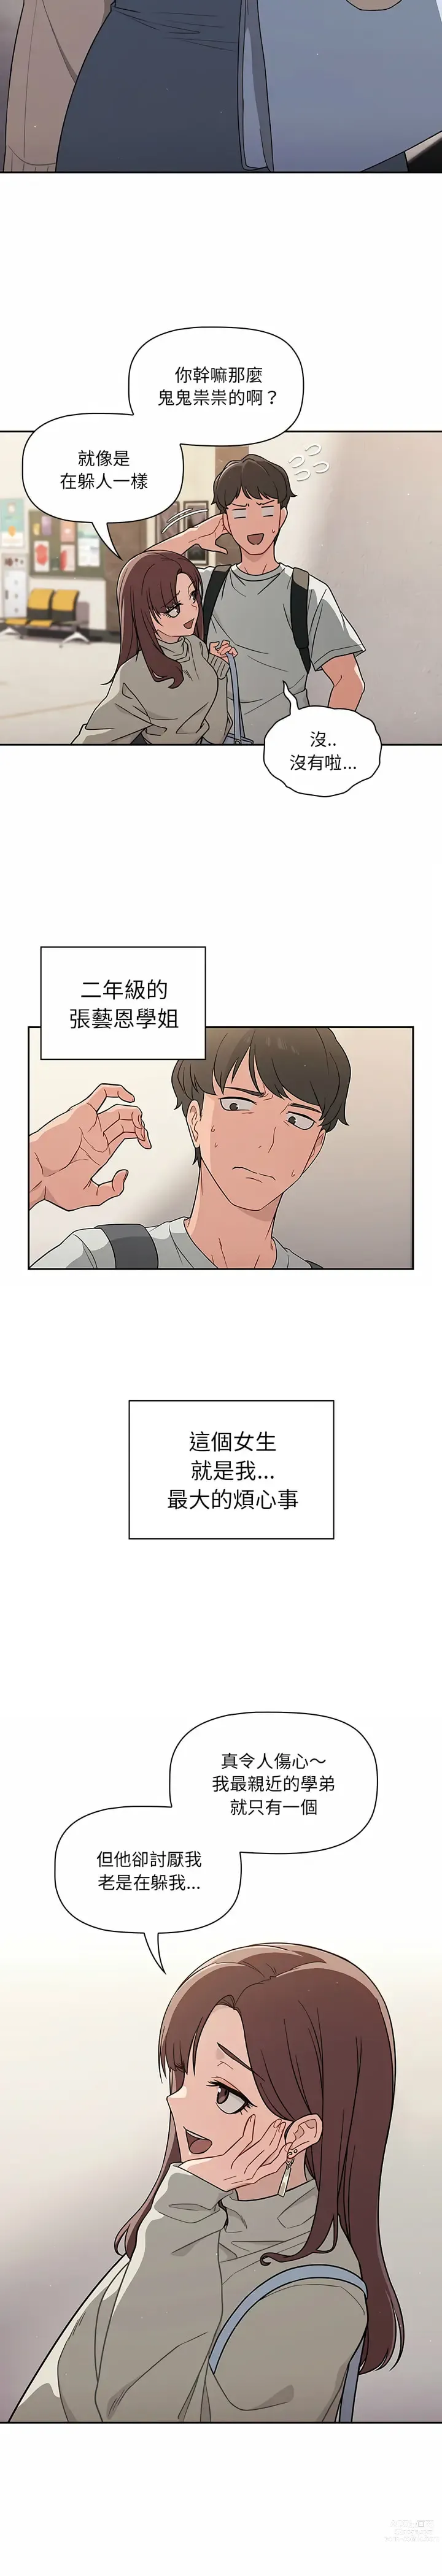 Page 7 of manga 調教開關 1-56 第一季 END